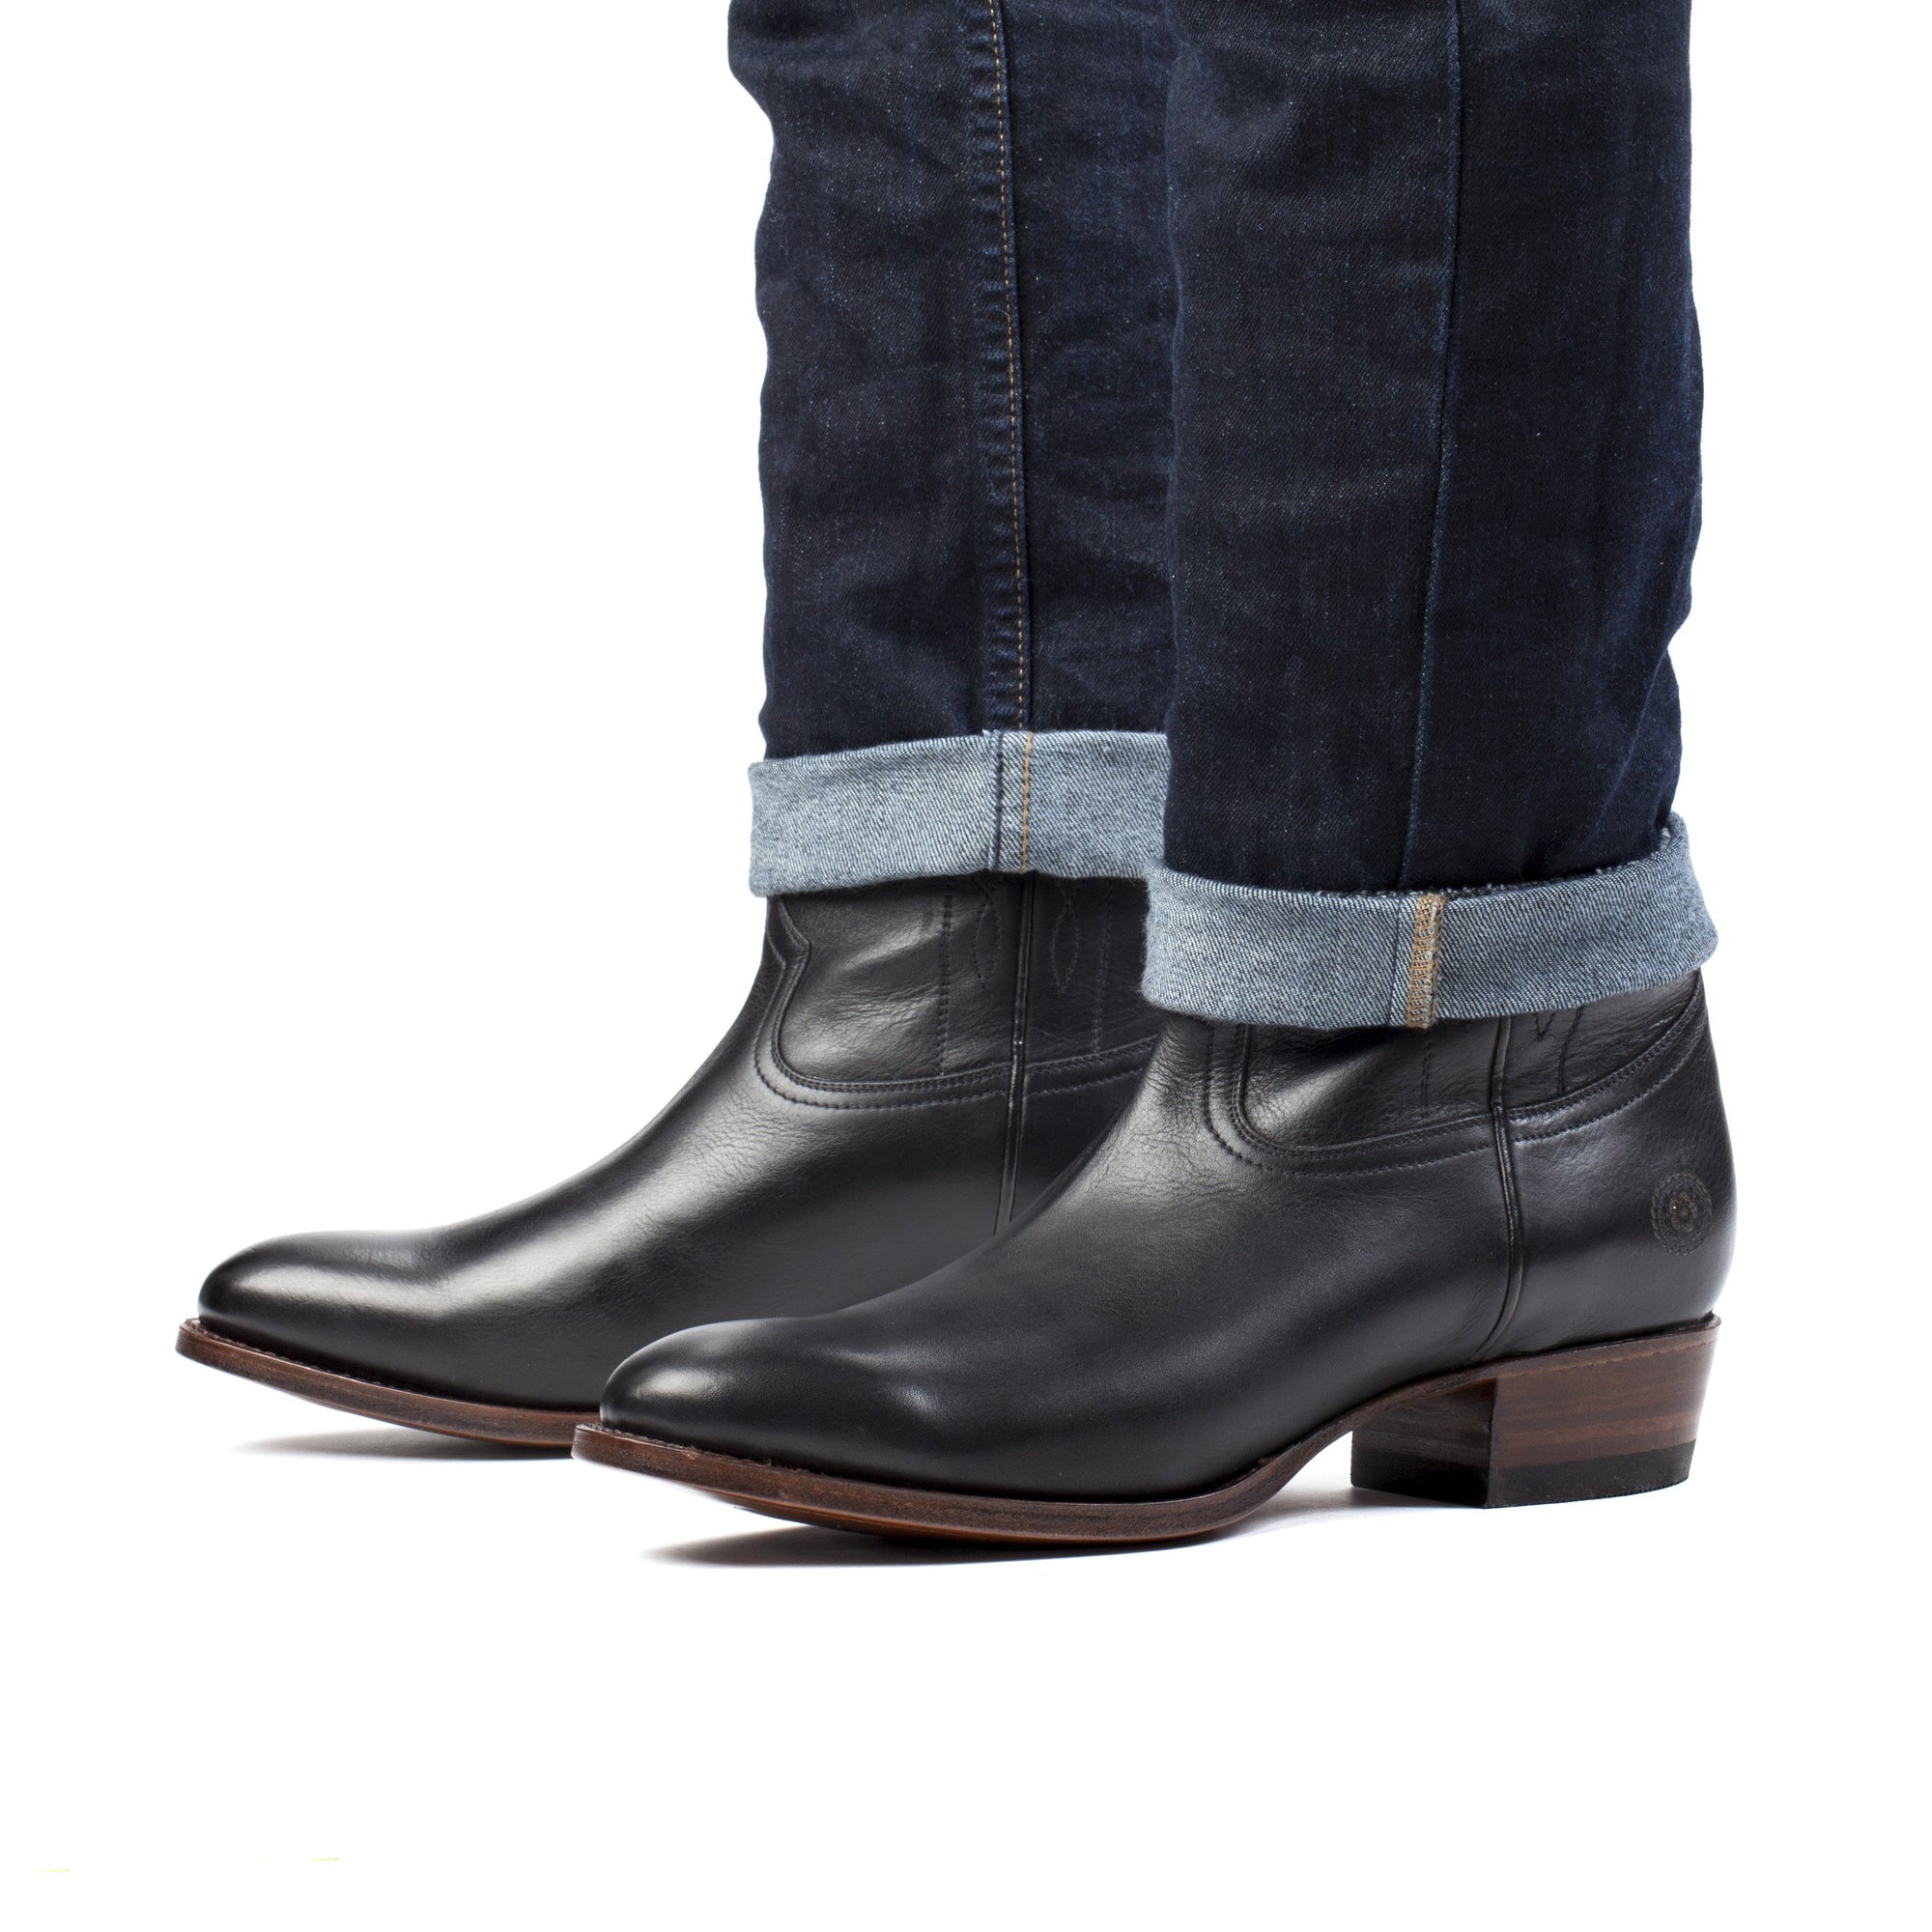 black long boots for men